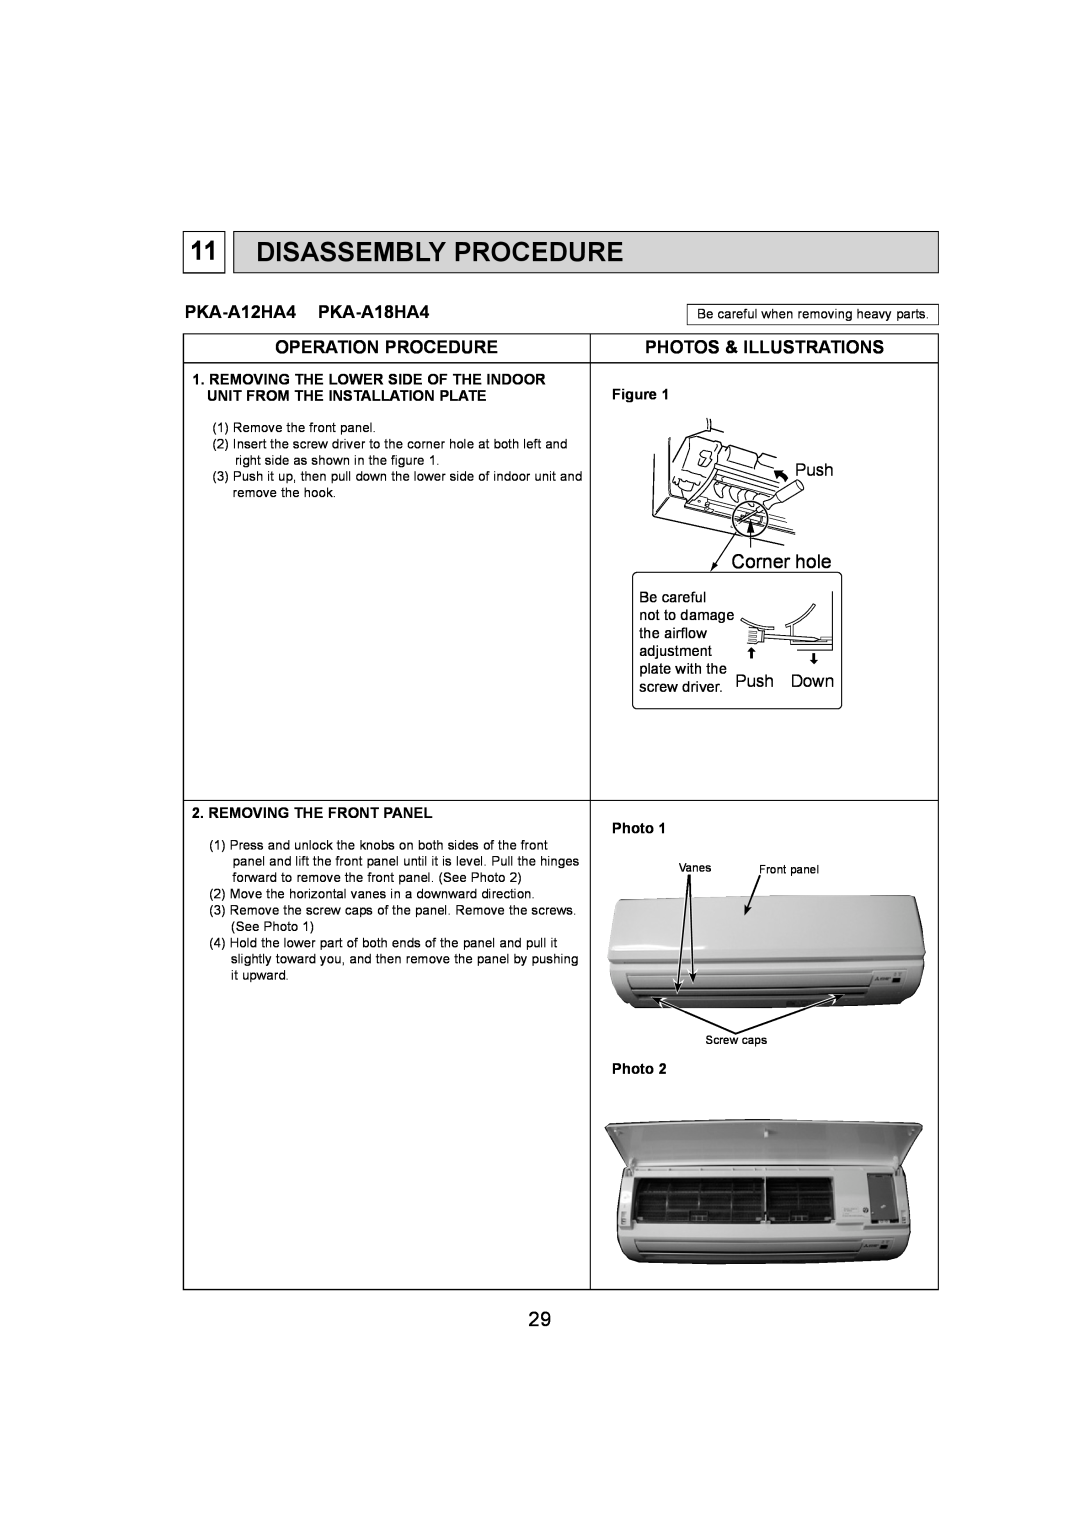 Mitsumi electronic PKA-A18HA4 Disassembly Procedure, Operation Procedure, Photos & Illustrations, Corner hole, Push 